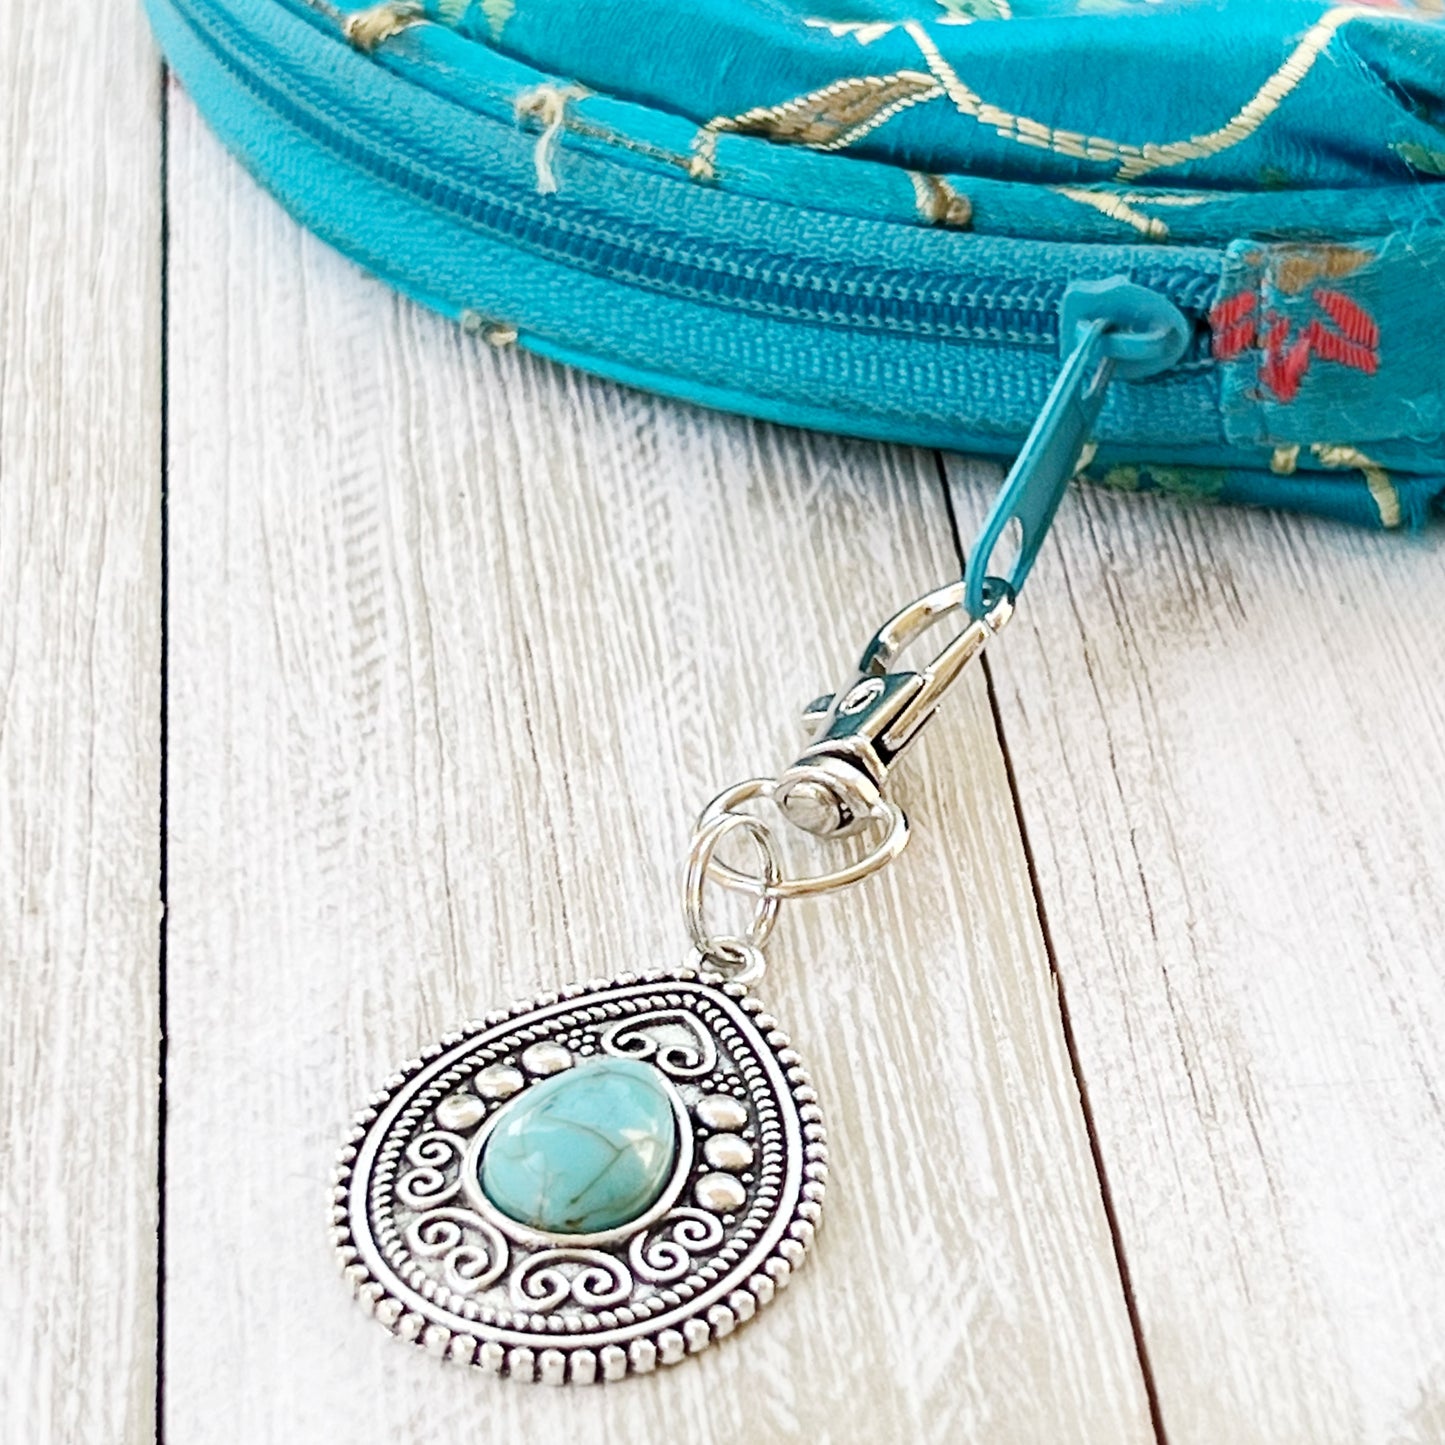 Turquoise Western Zipper Pull Handbag Keychain Charm - Stylish Western-Inspired Accessory